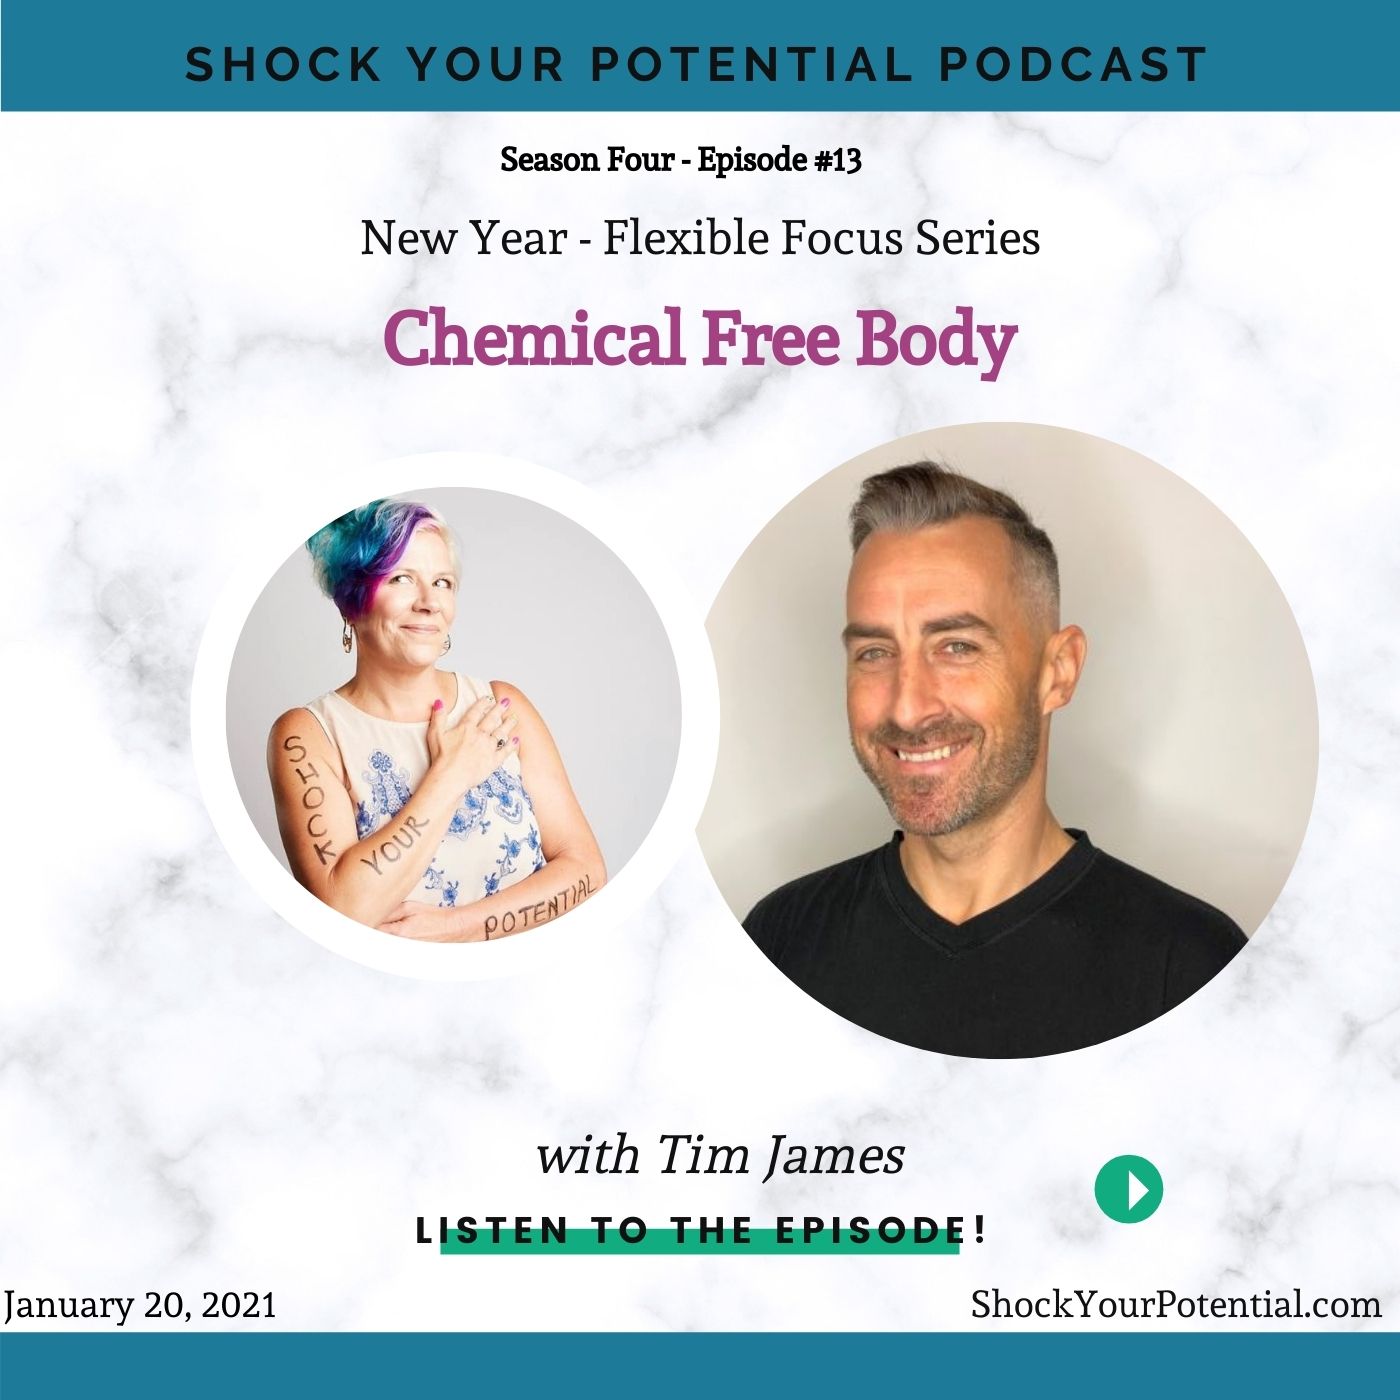 Chemical Free Body – Tim James